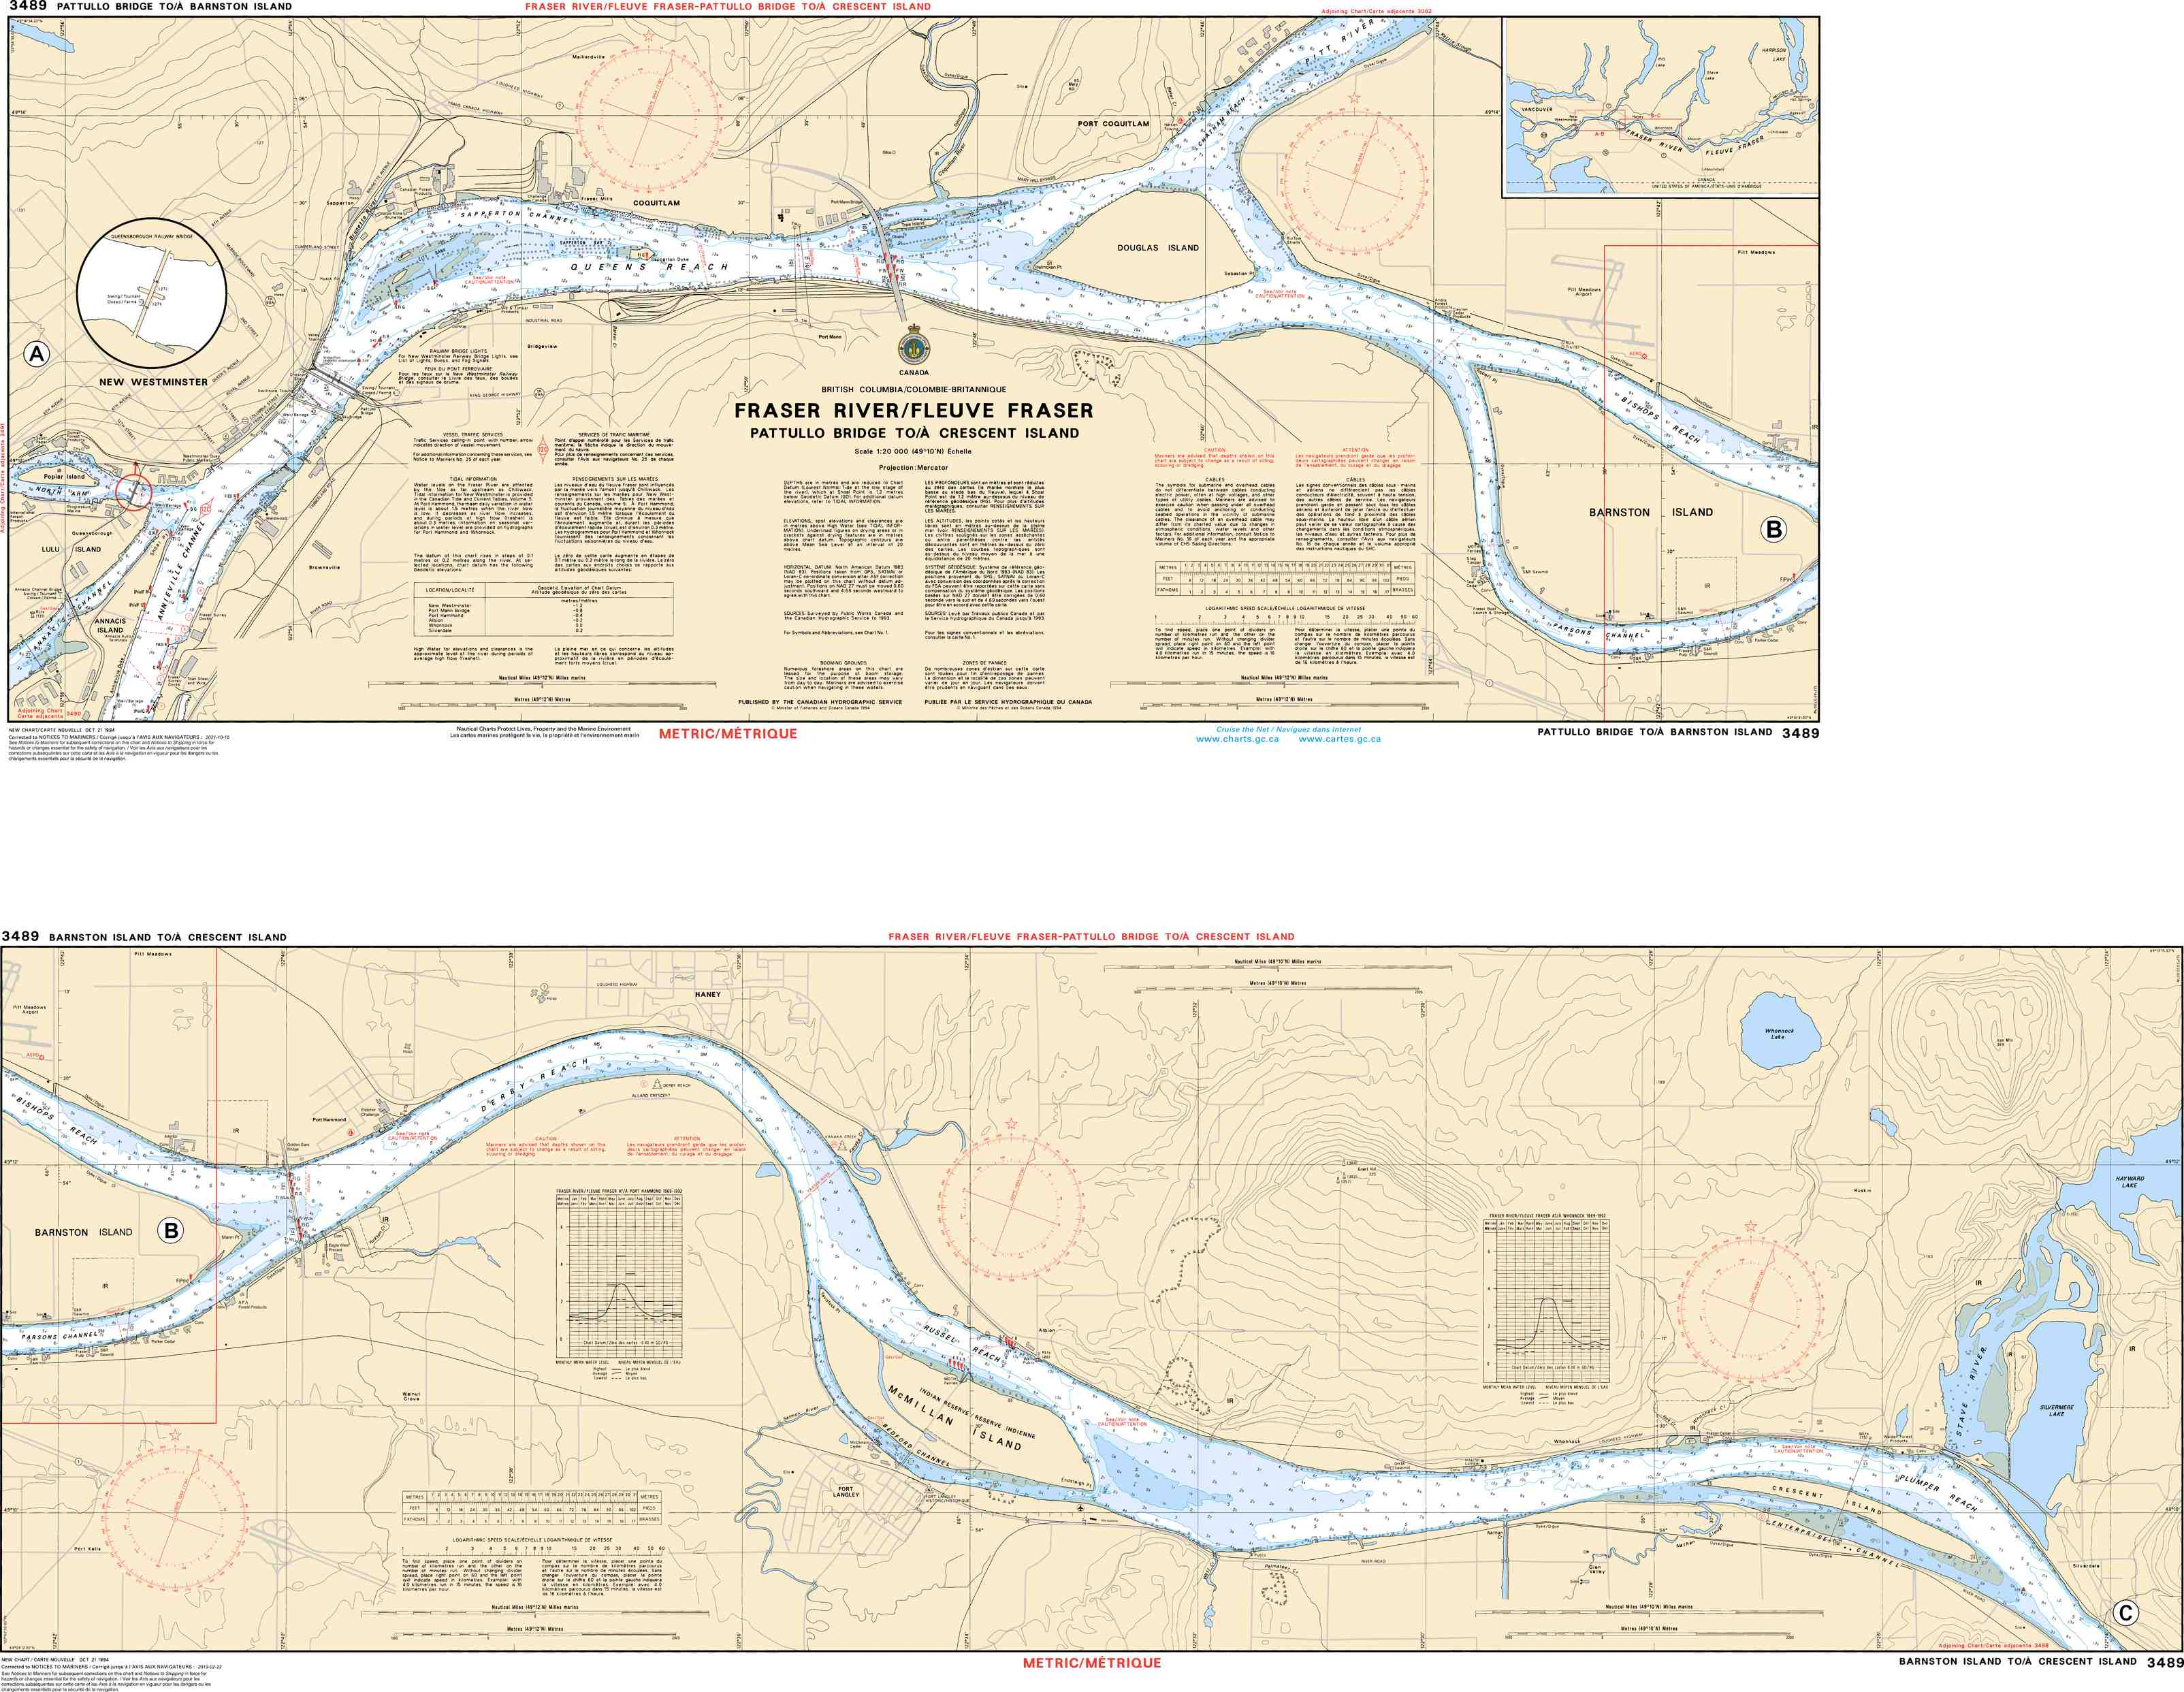 Canadian Hydrographic Service Nautical Chart CHS3489: Fraser River/Fleuve Fraser, Pattullo Bridge to/à Crescent Island